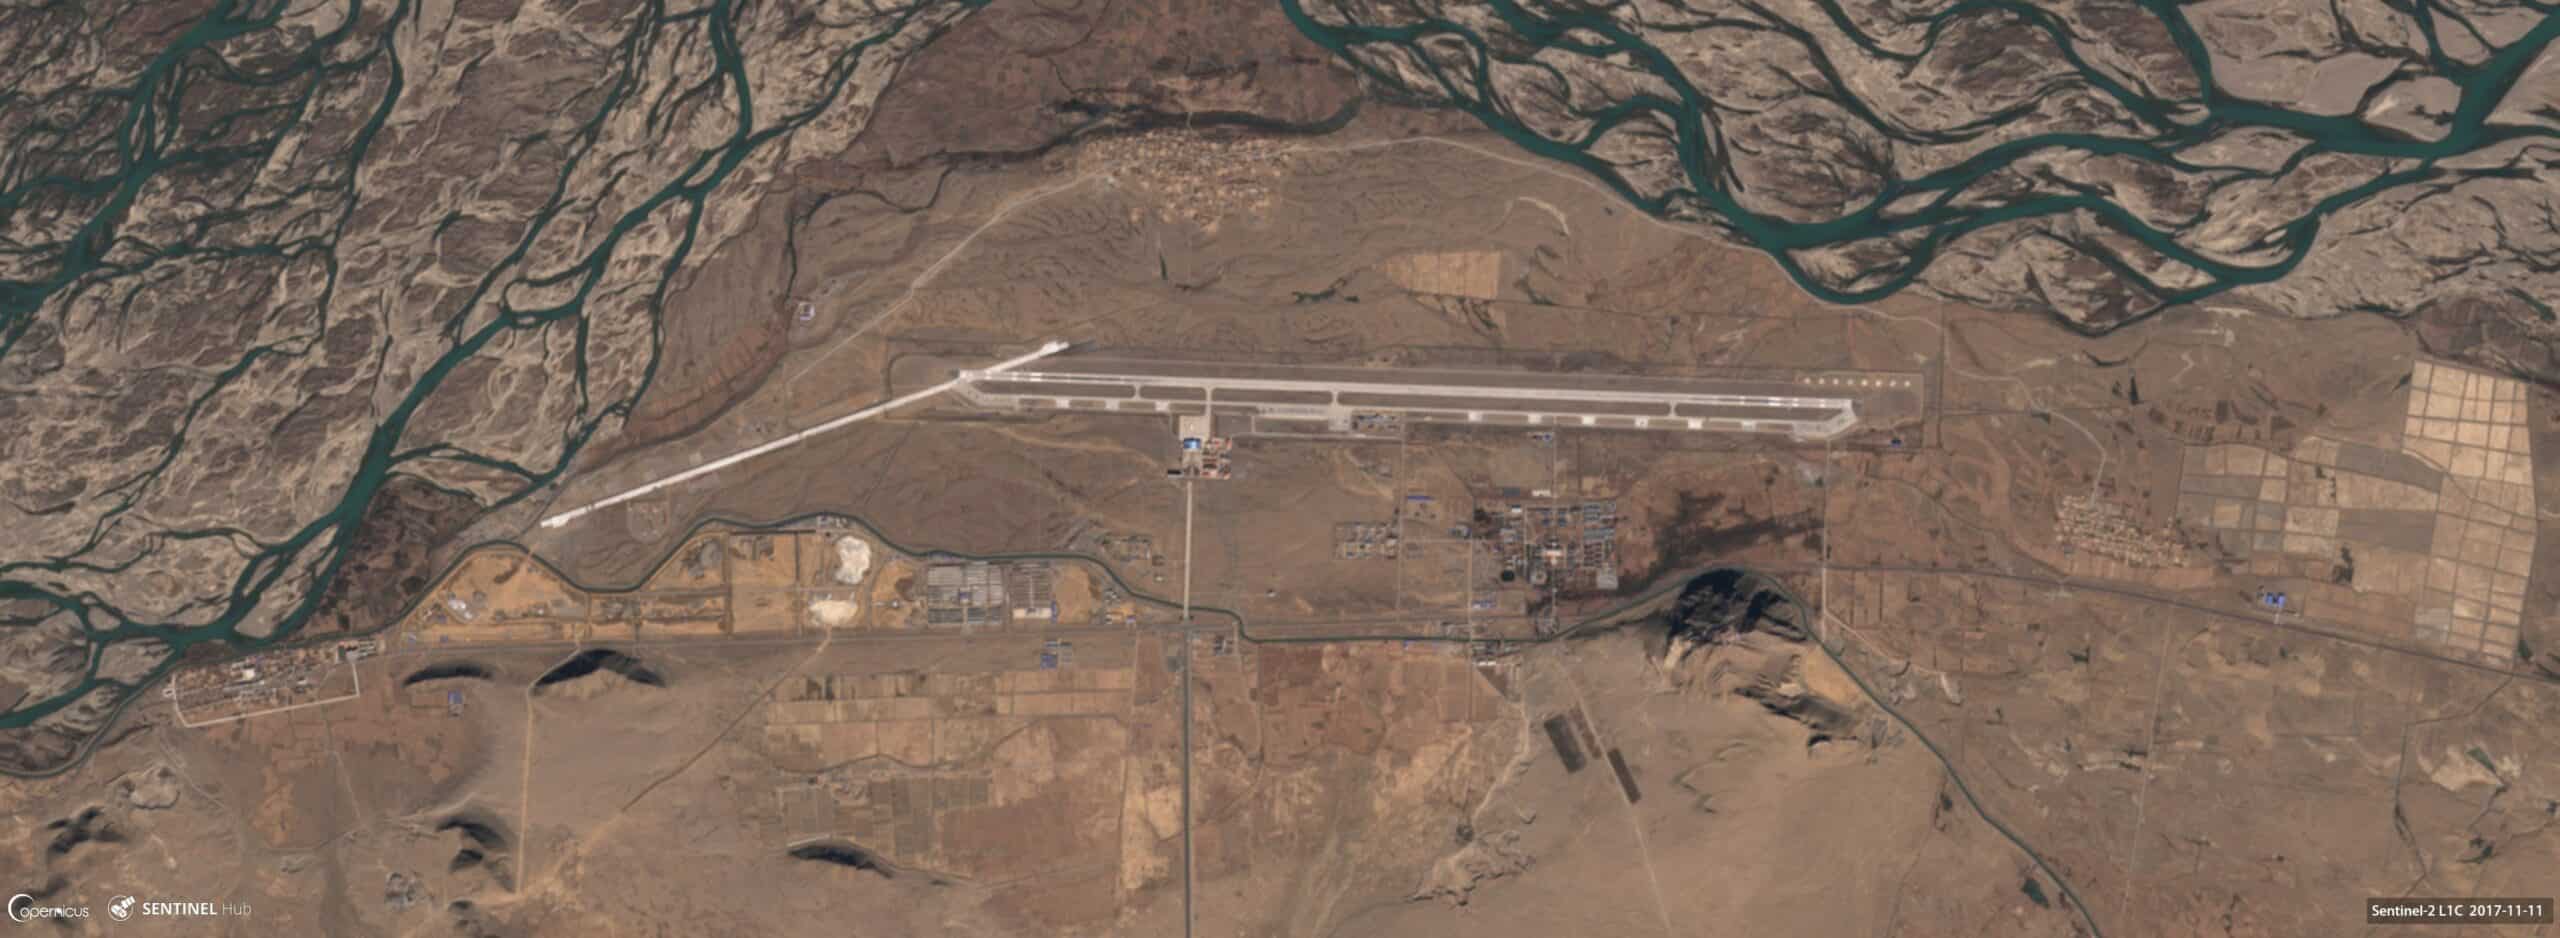 Shigatse Peace Airport runway